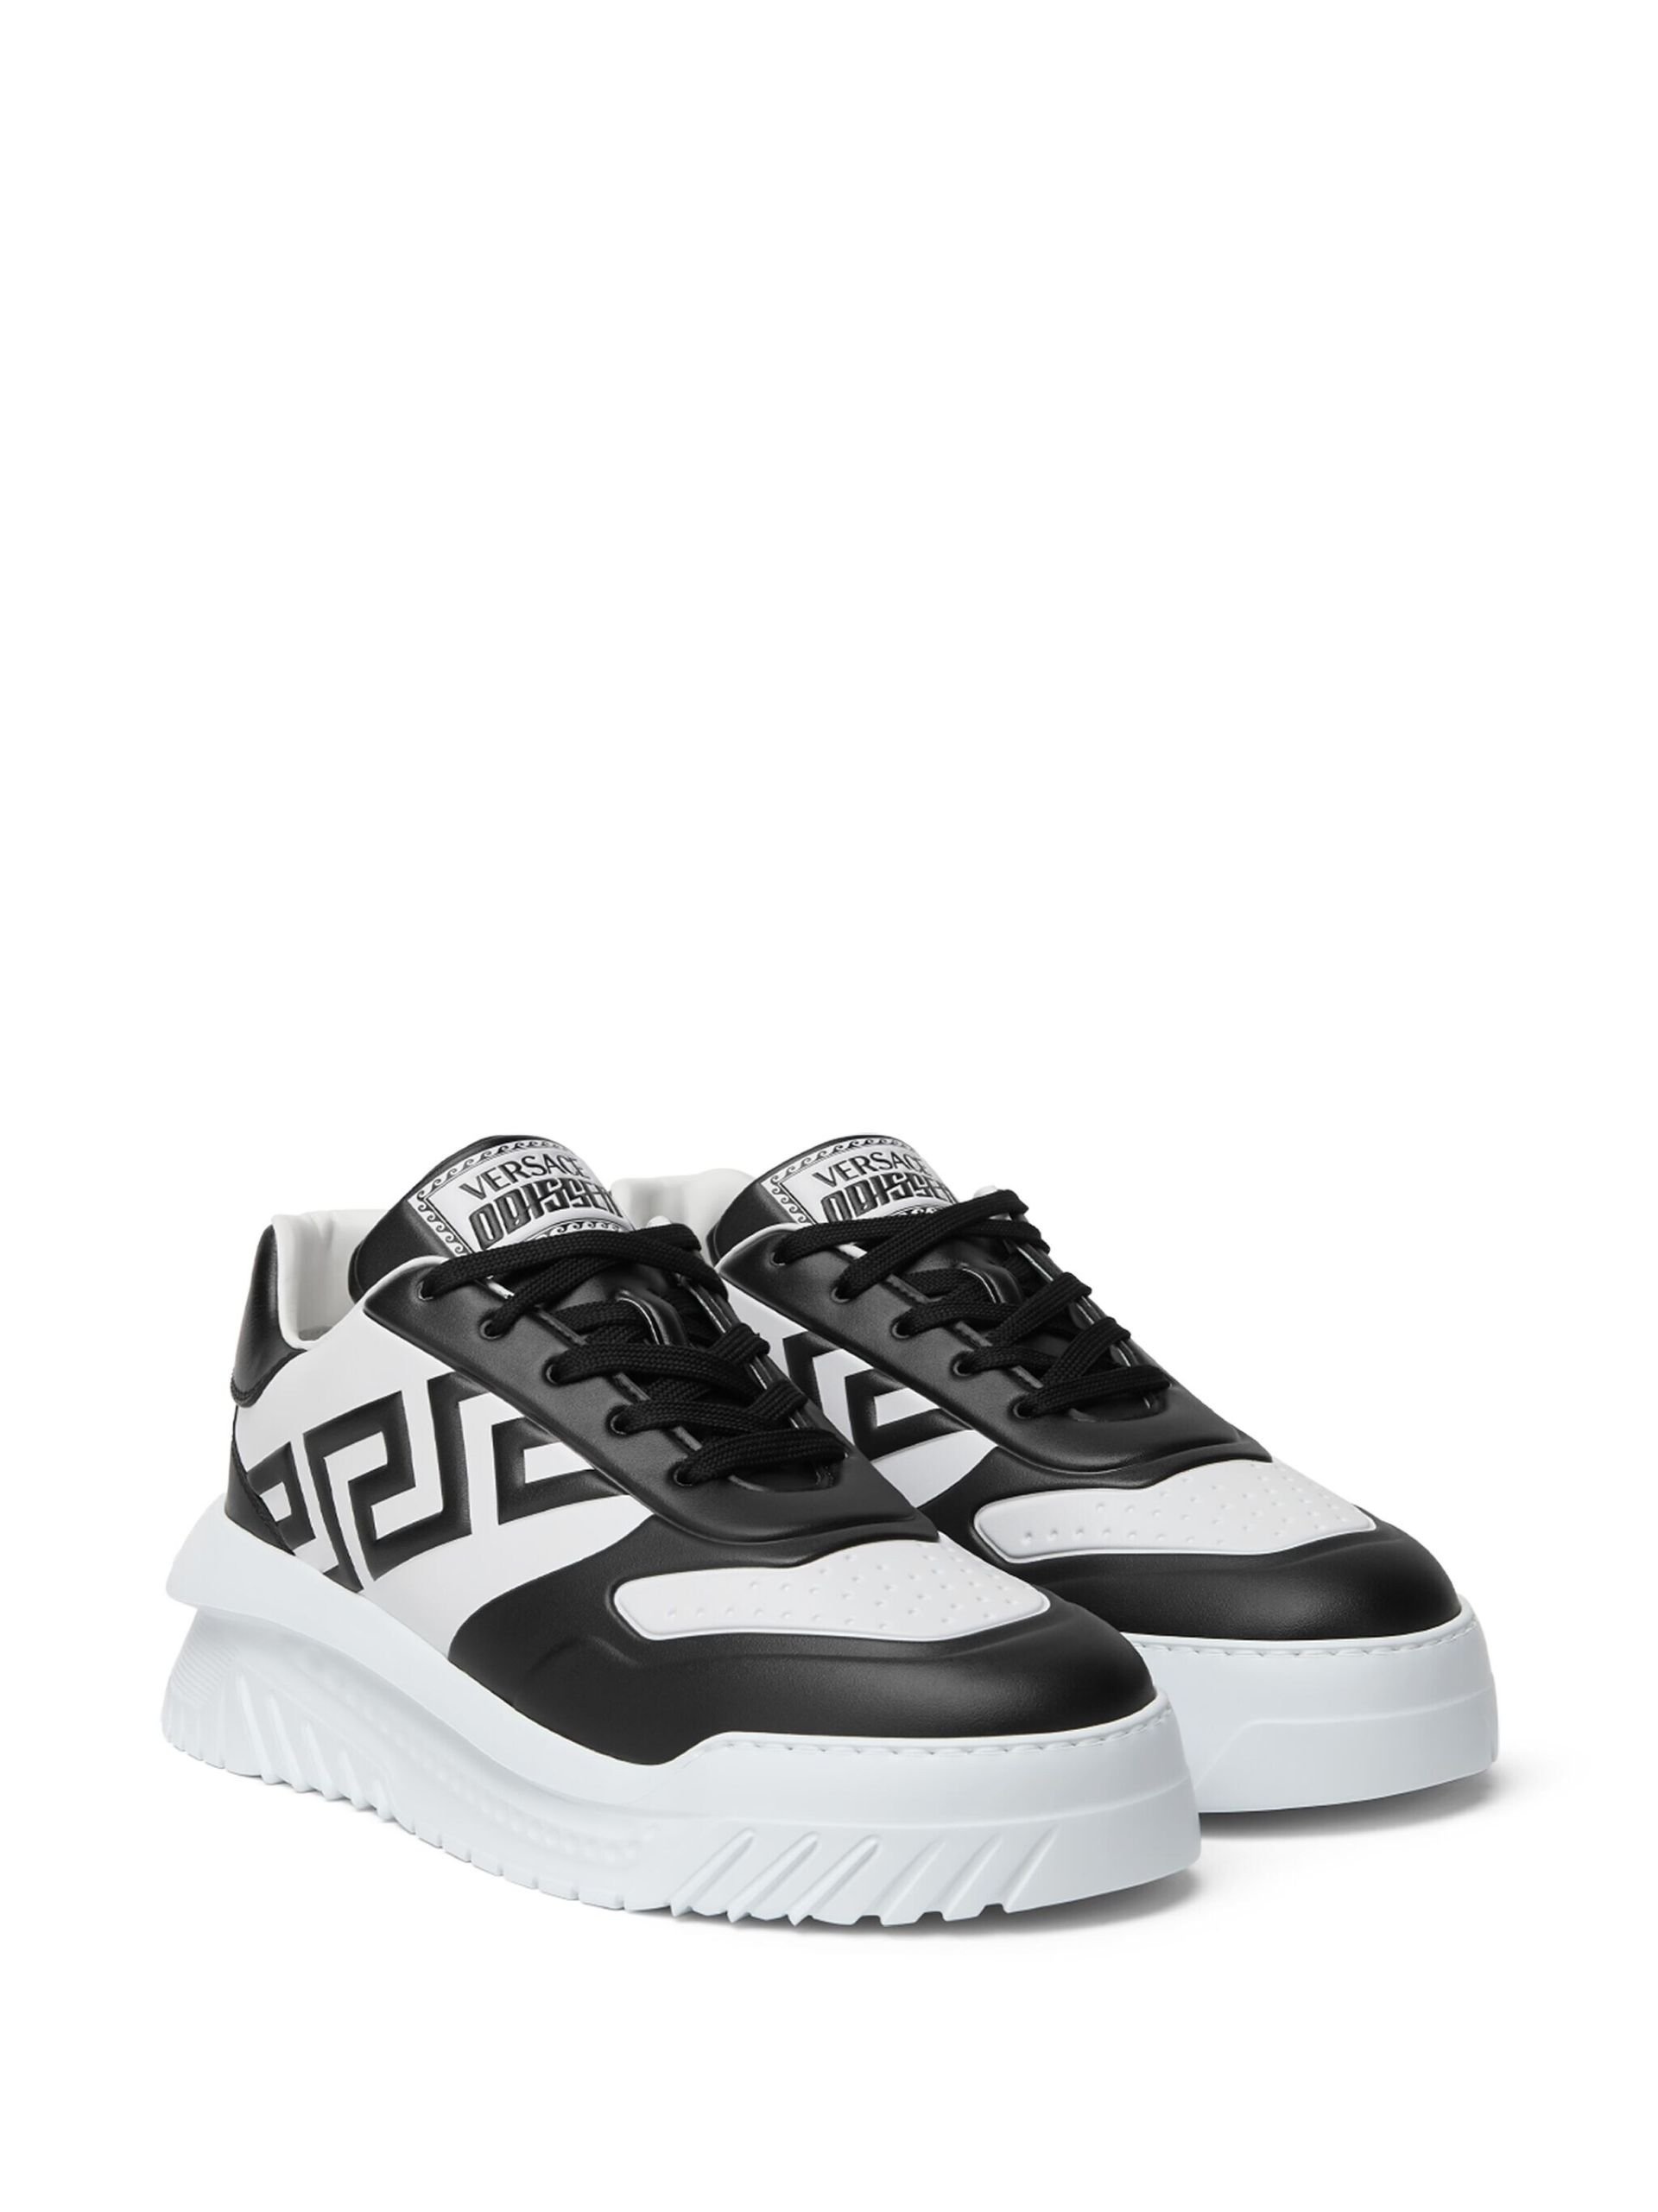 Black Greca Odissea Leather Sneakers - 2